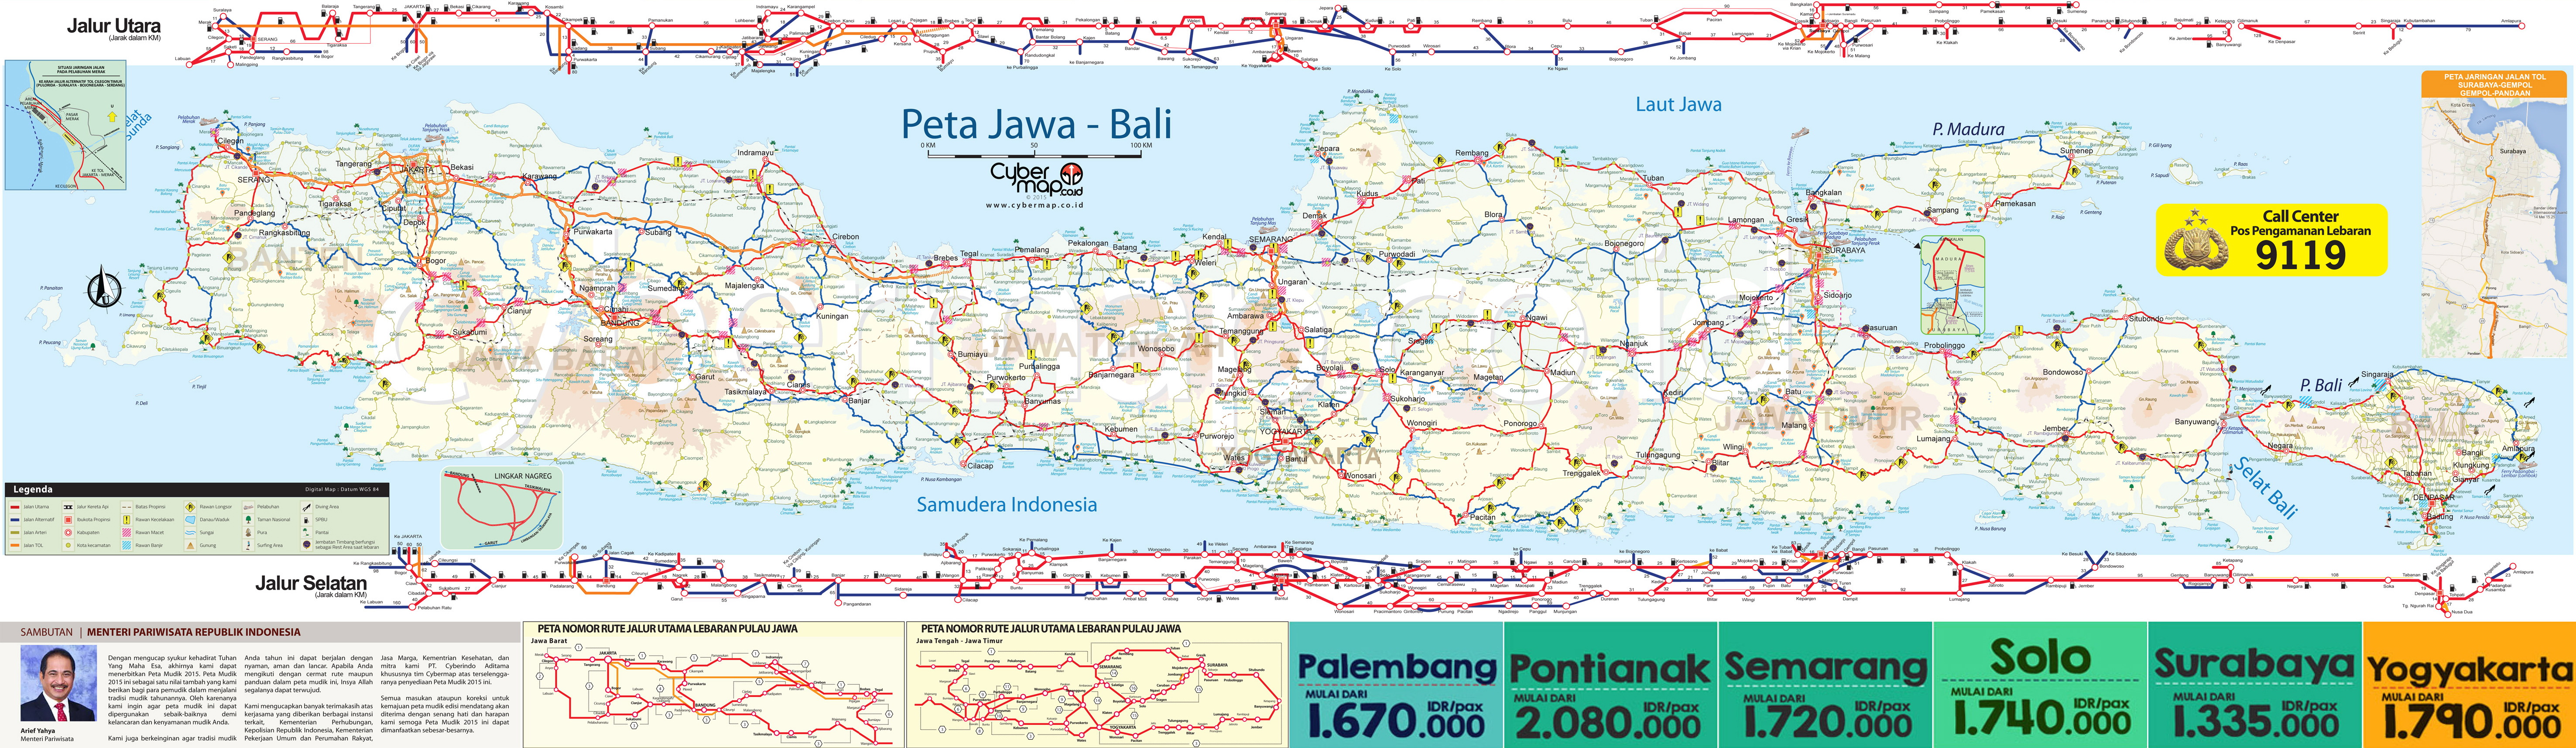 Peta Pulau Jawa Pdf - heavyde